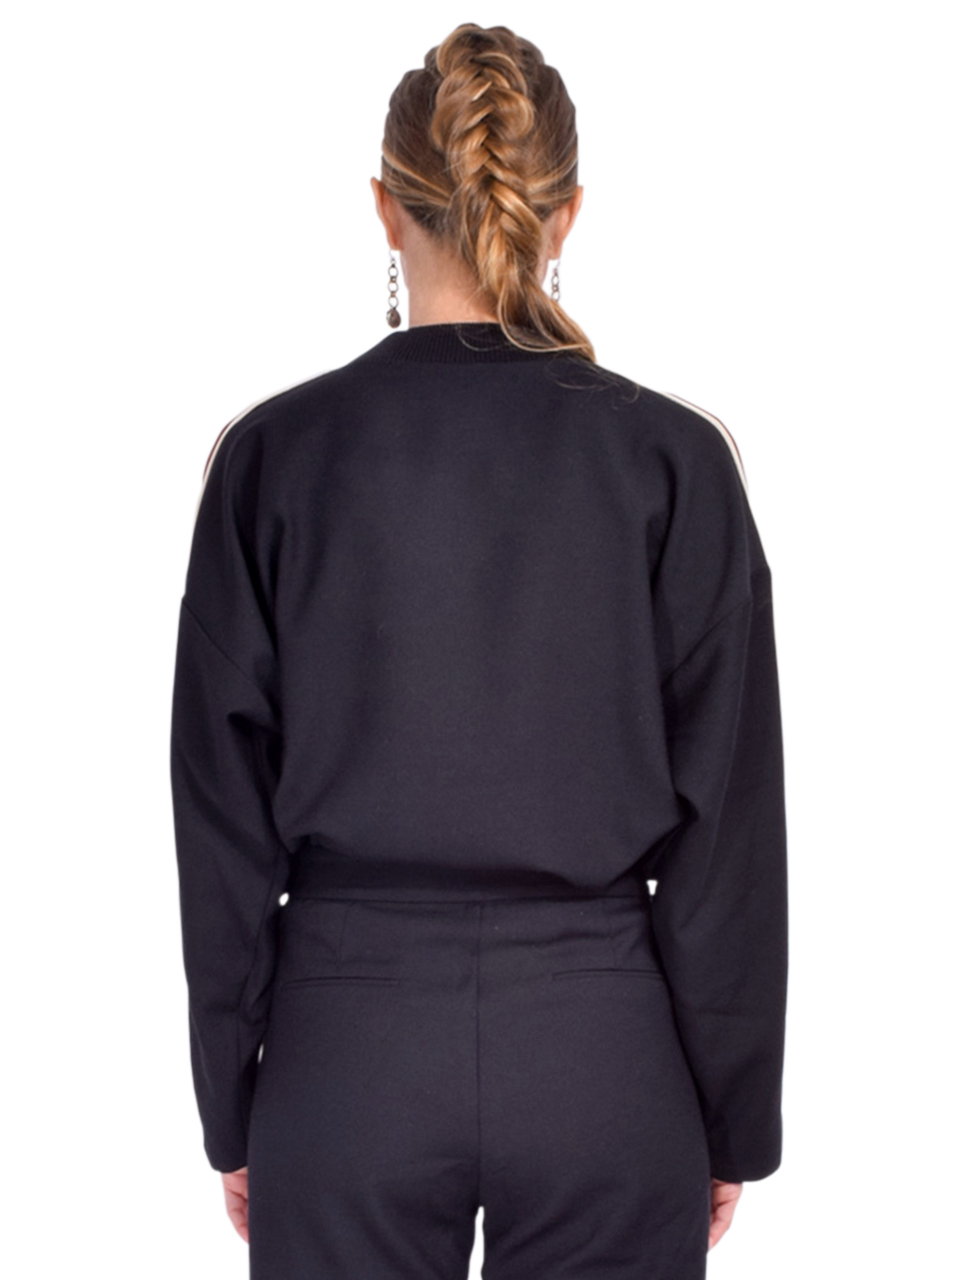 BA&SH Spade Sweatshirt Style Top in Black Back View 